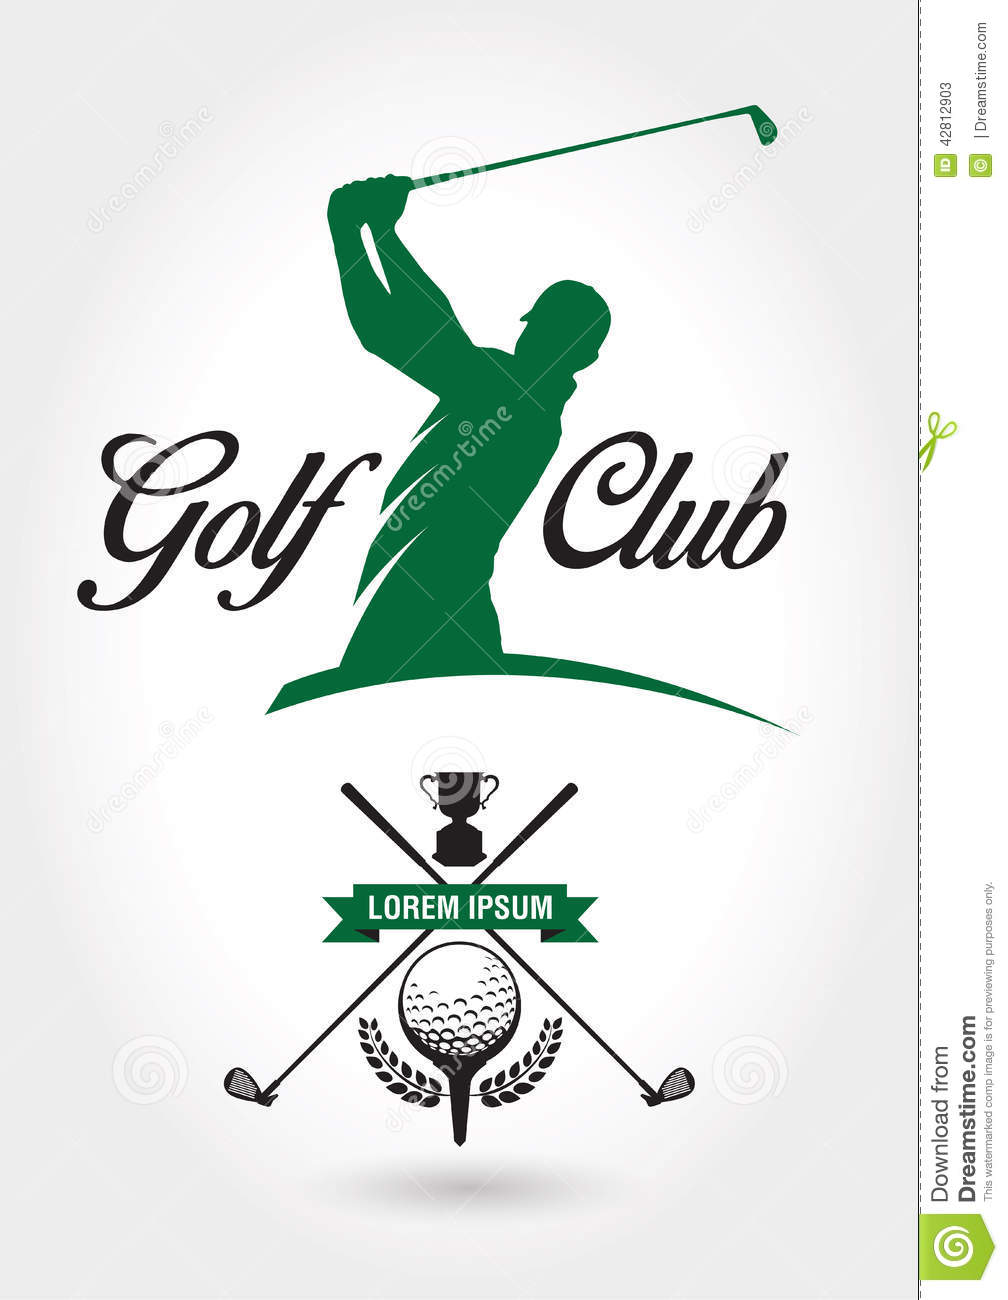 Golf Club Vector Logo